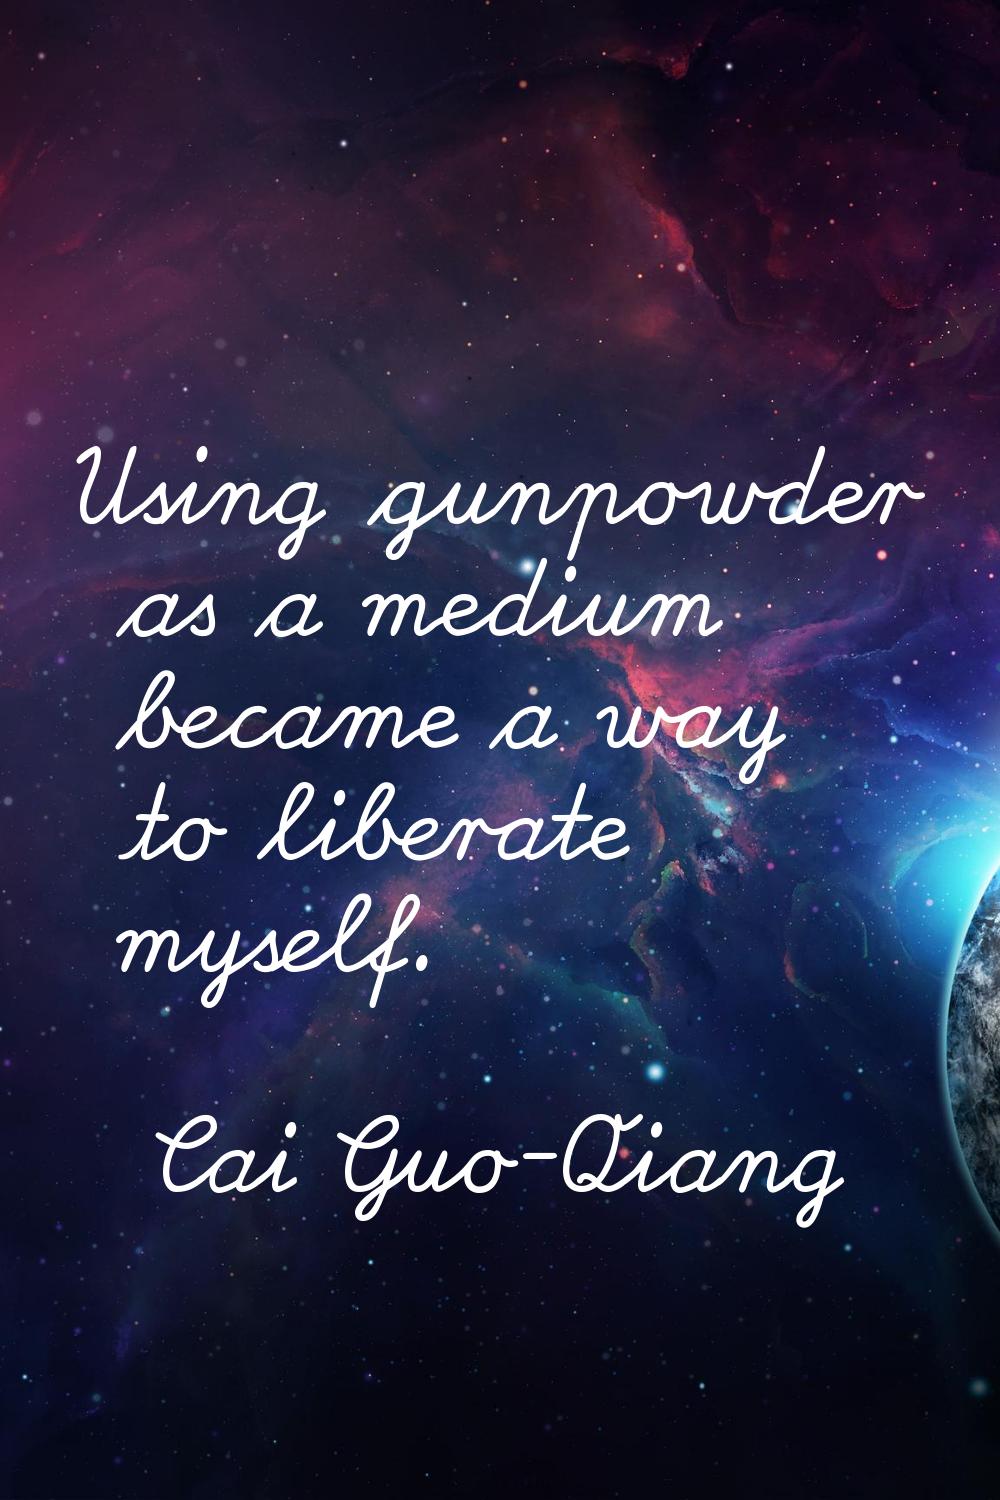 Using gunpowder as a medium became a way to liberate myself.